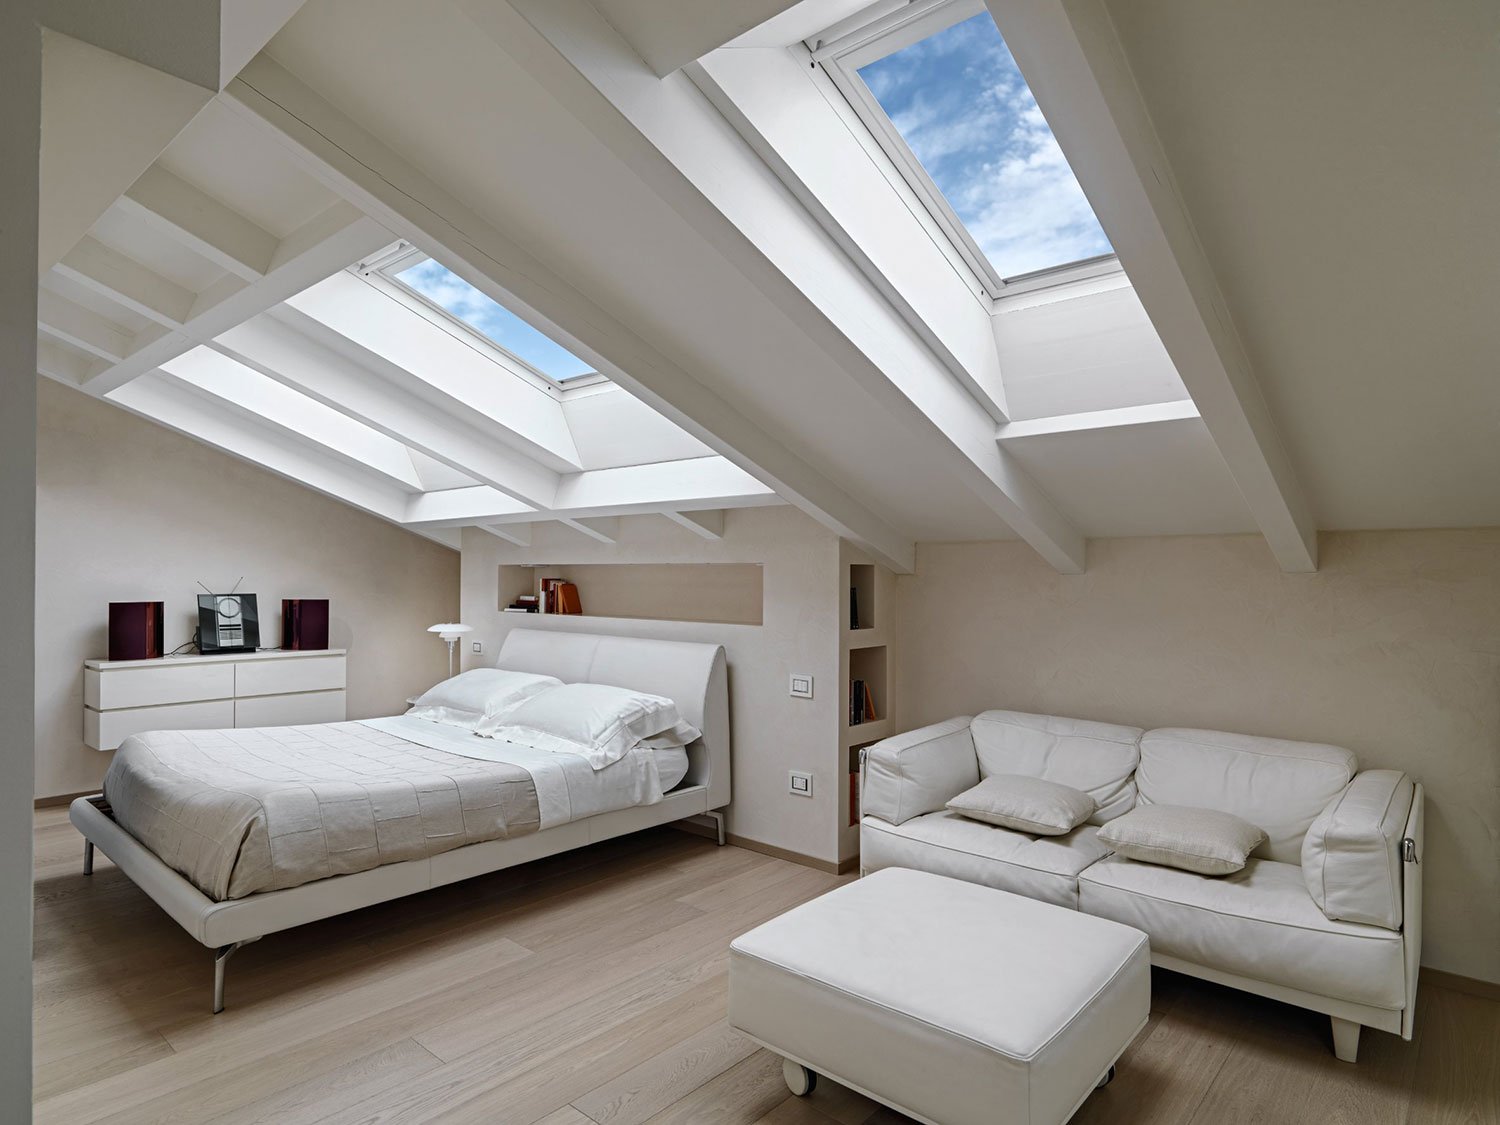 skylight provides more natural light